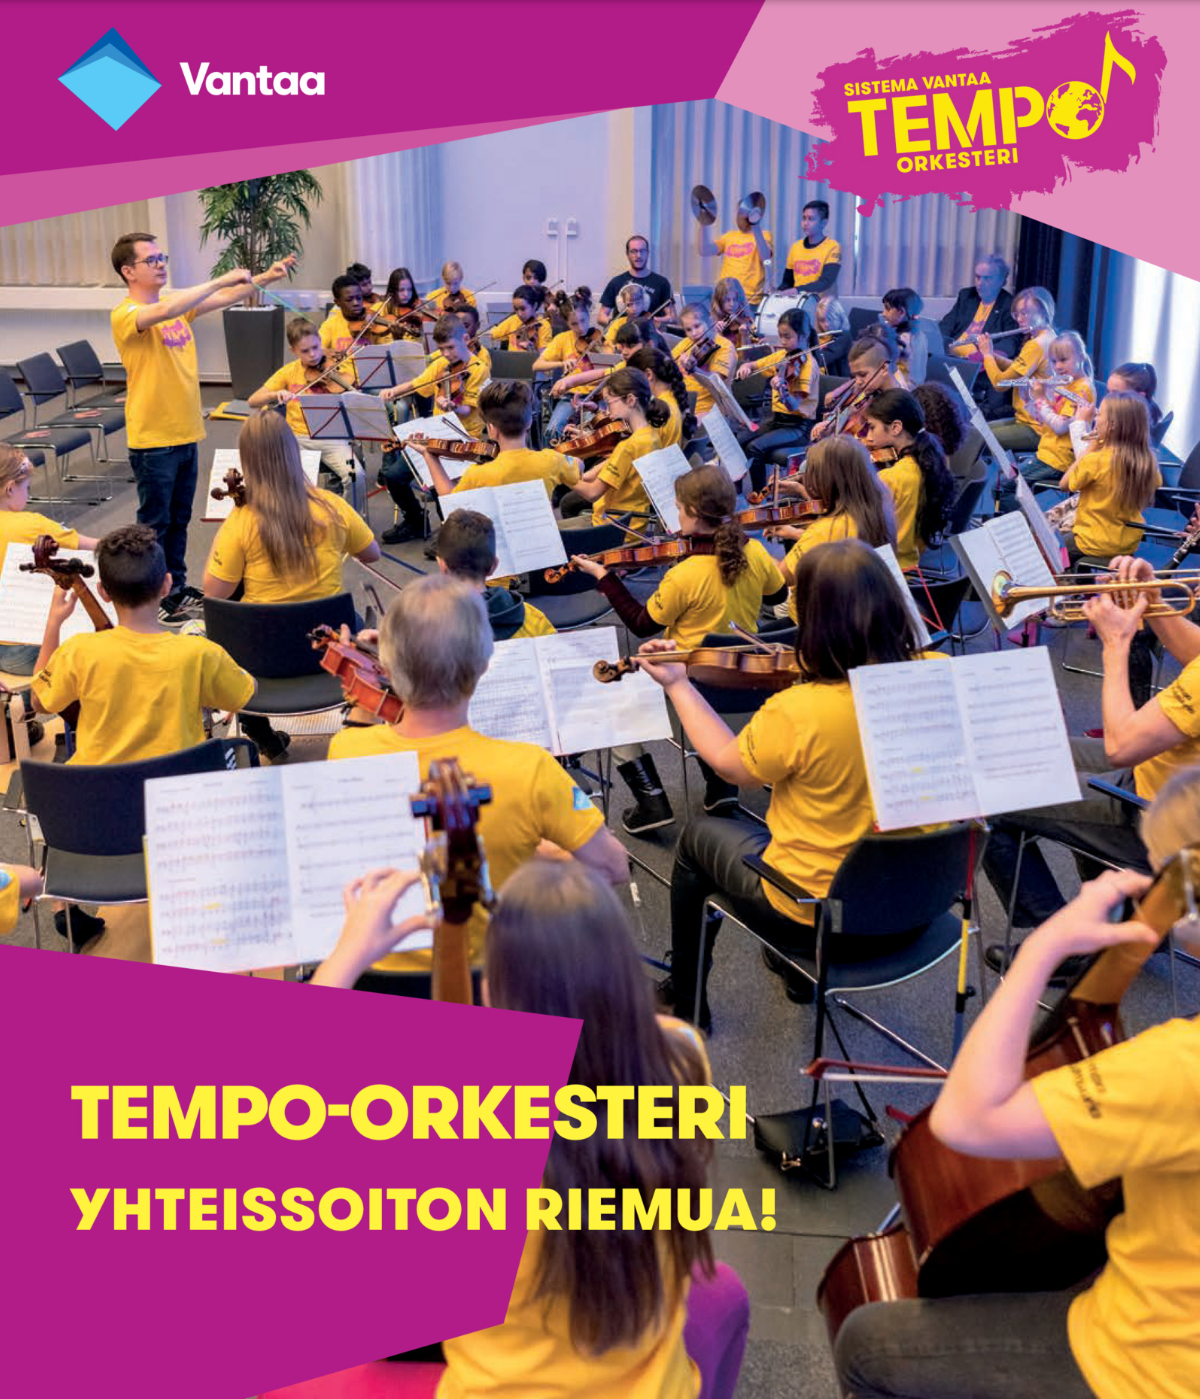 Tempo-orkesteri: Yhteissoiton riemua!